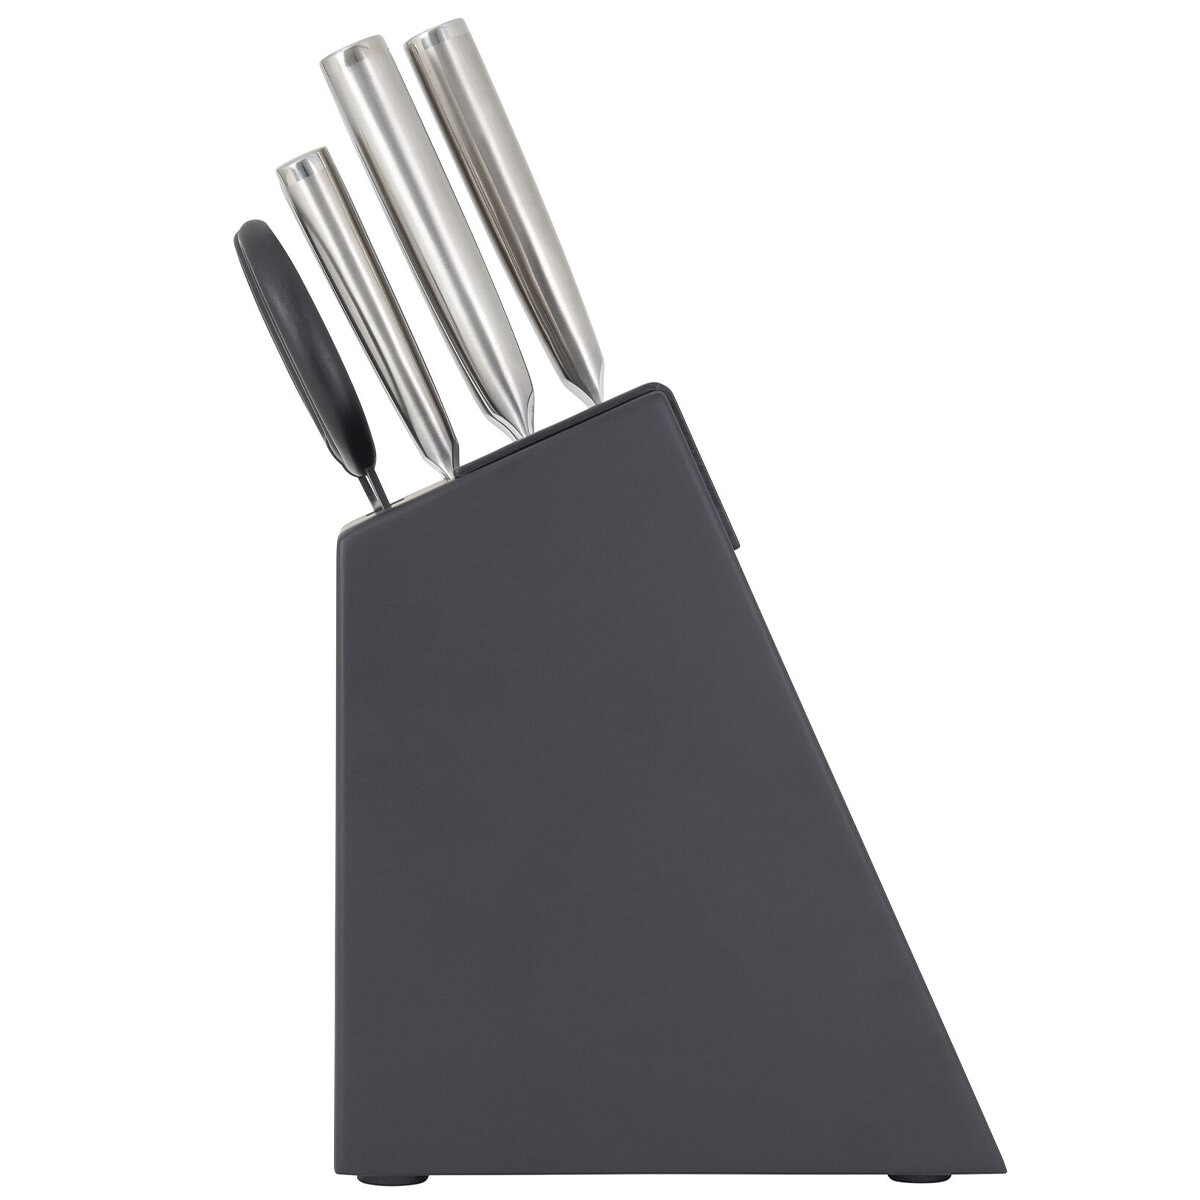 KitchenAid 7pc Professional Series Cutlery Set Review - Slinky Studio